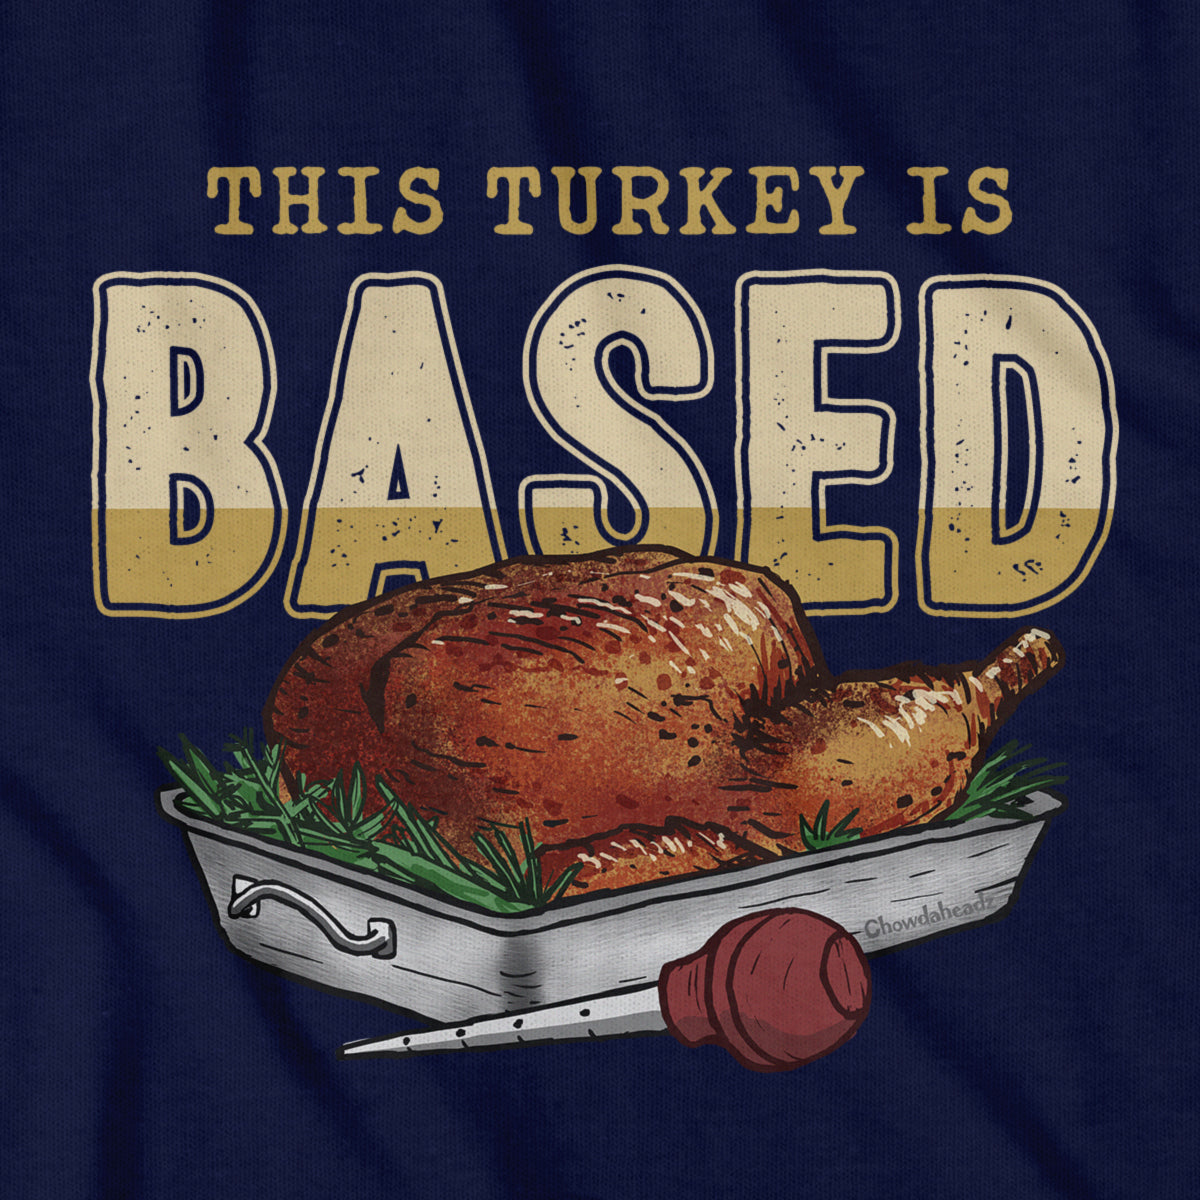 This Turkey is Based T-Shirt - Chowdaheadz